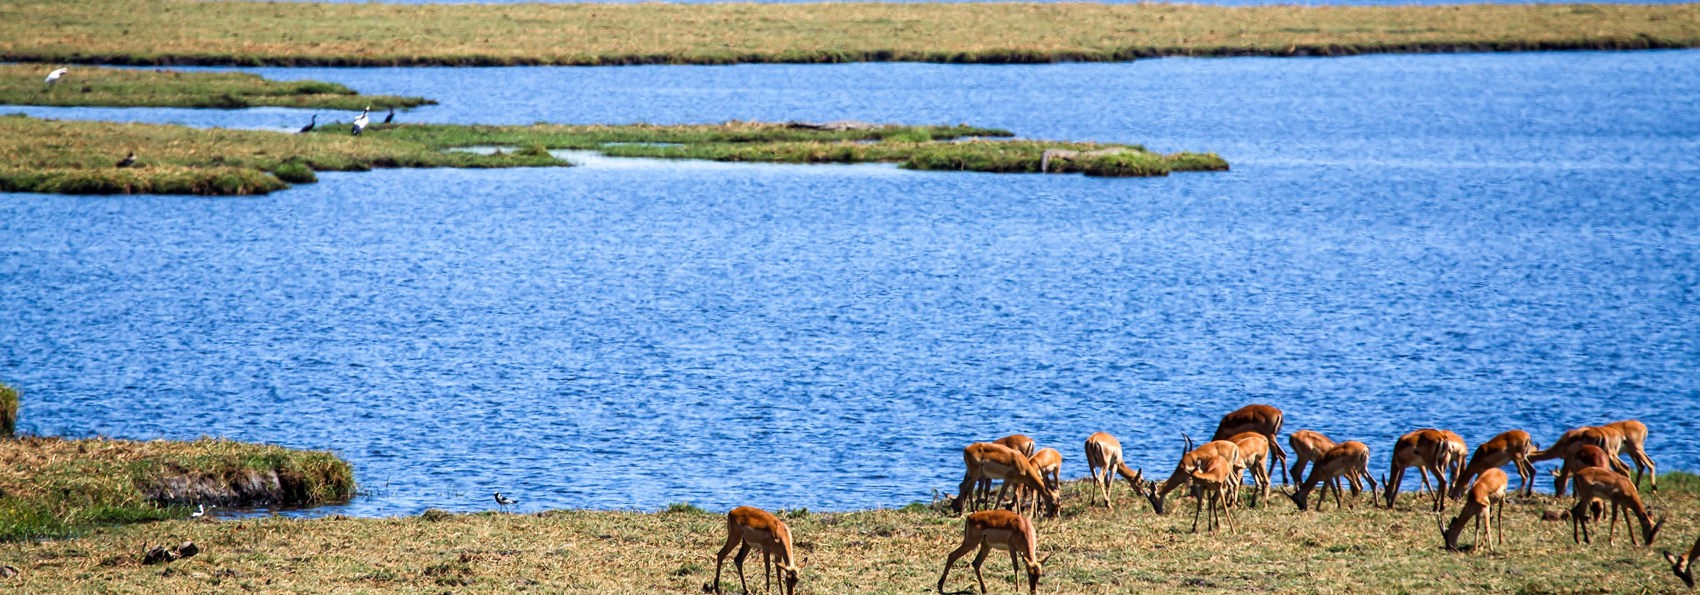 sydafrika - chobe nationalpark_impala_02